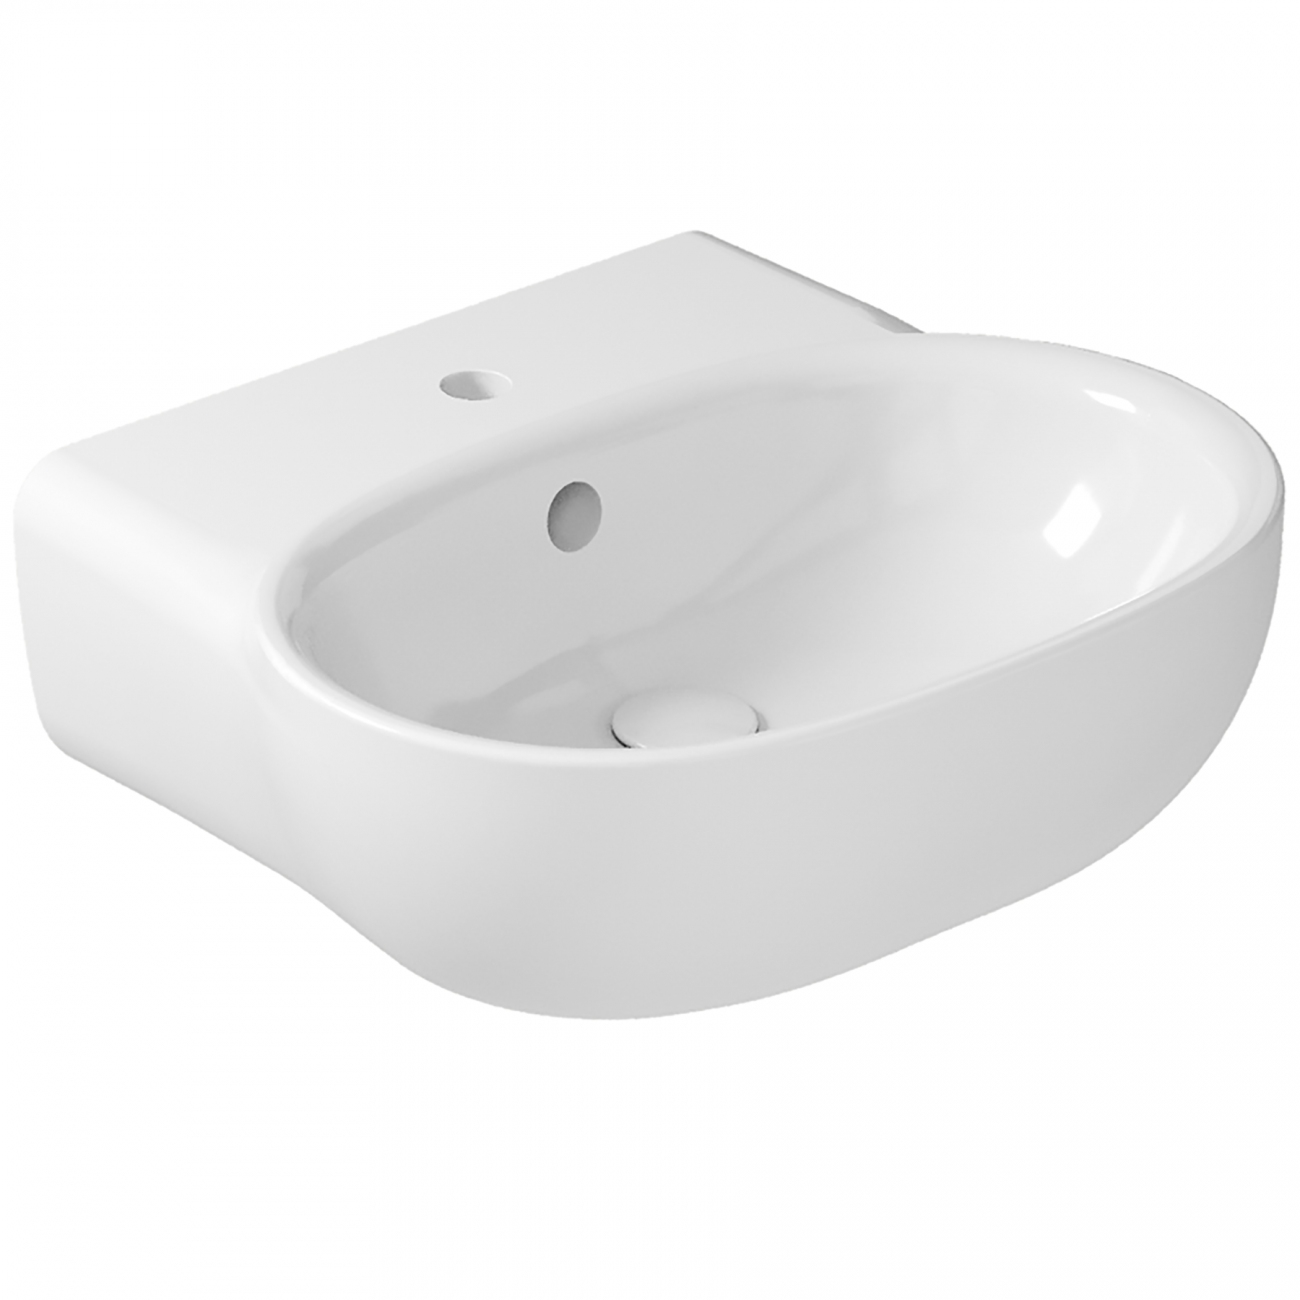 Modular washbasins and ceramic top: Catalano Horizon